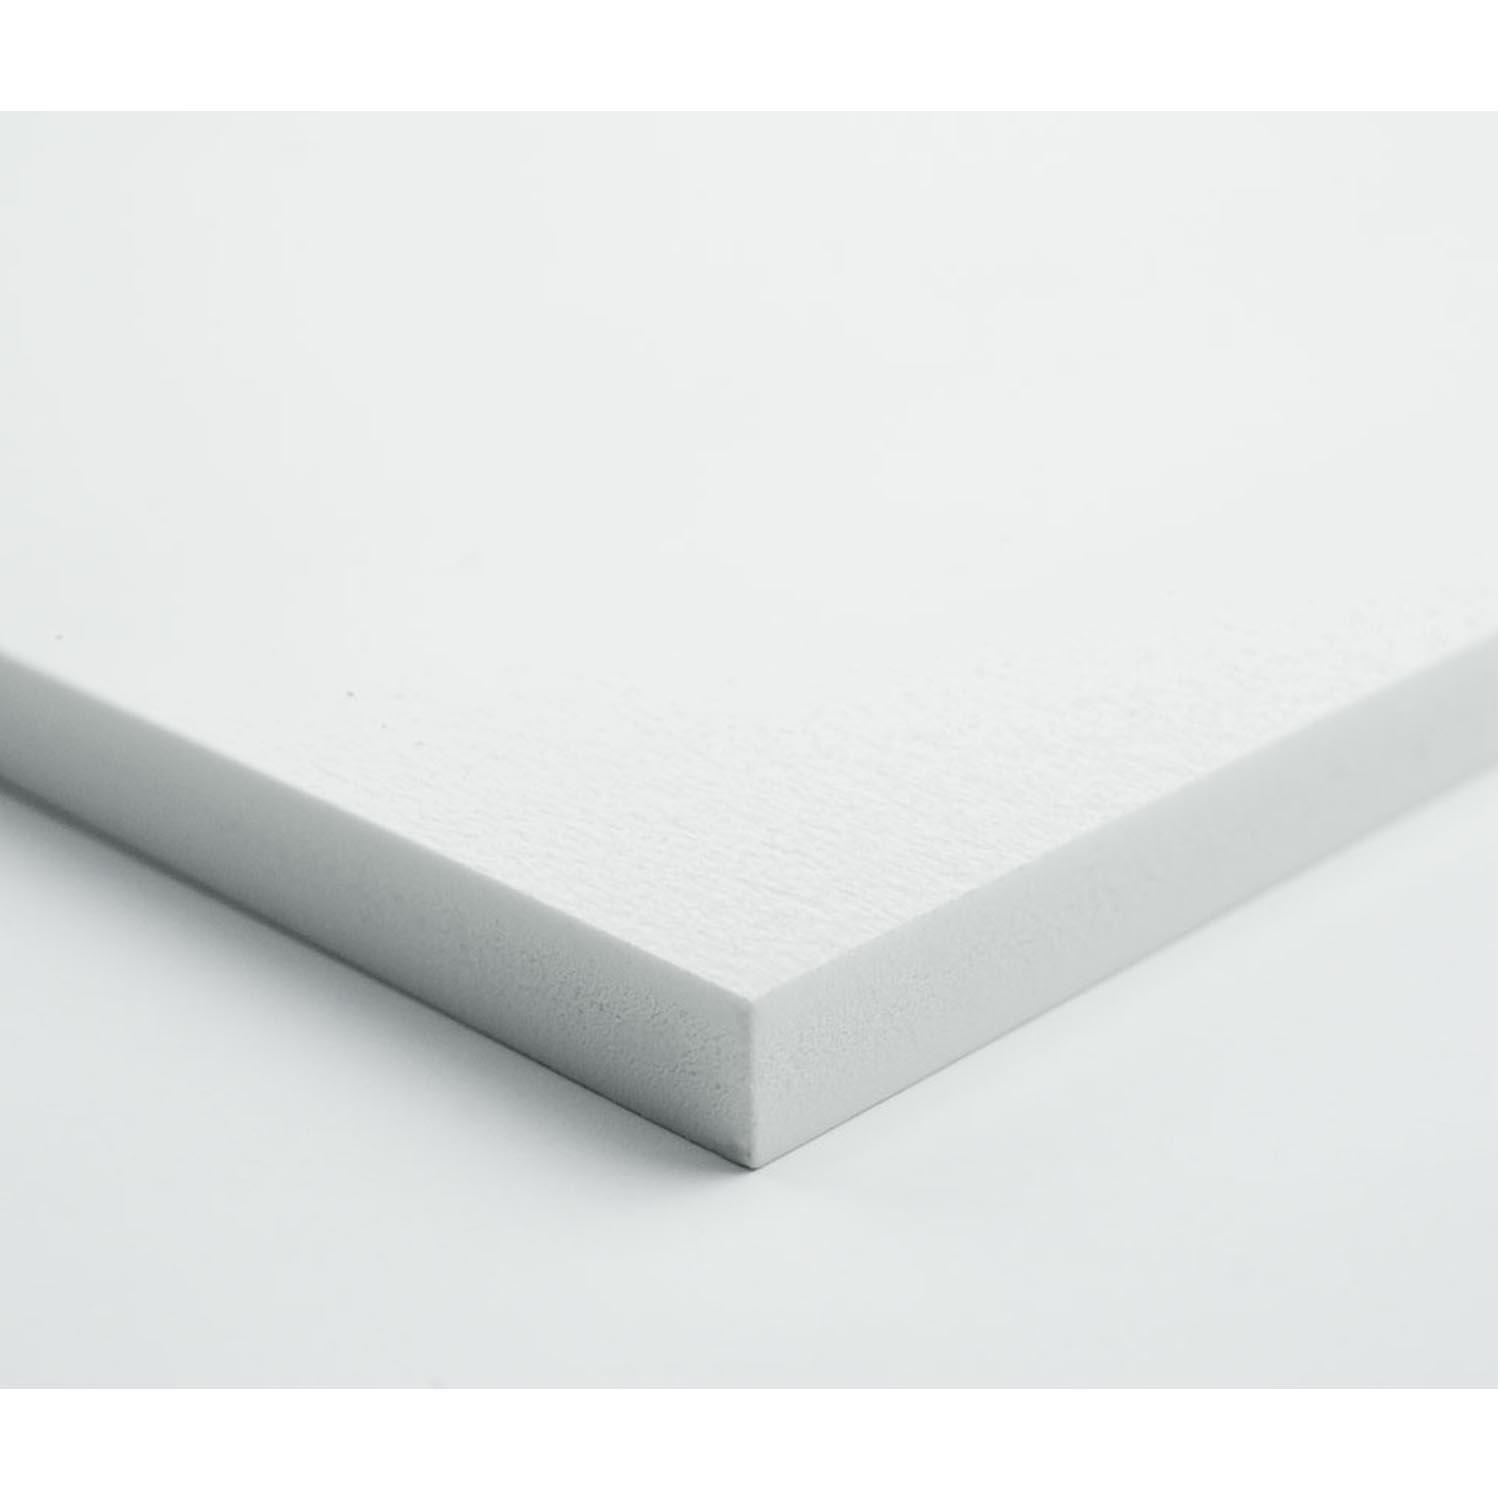 7.5mm Beyaz Dekota Levha PVC Foam Foreks Levha Maket Malzemesi